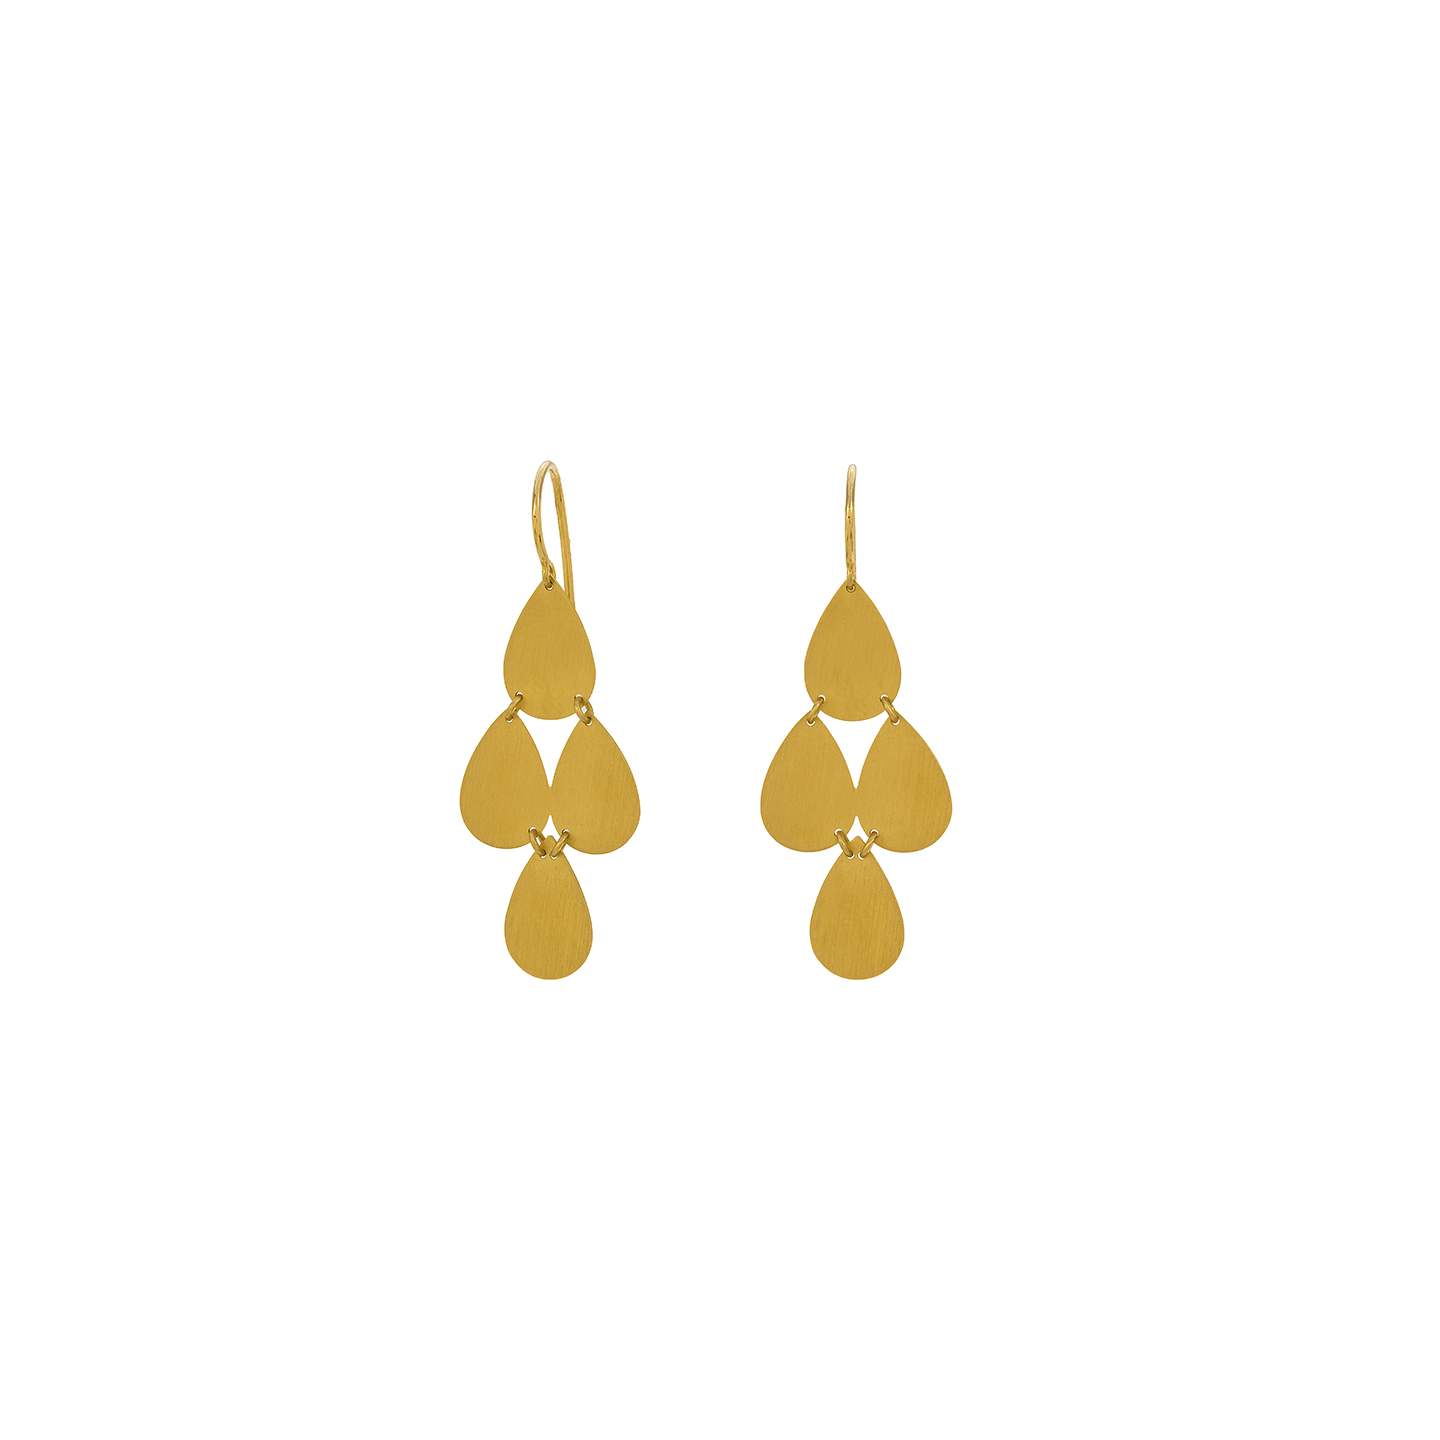 Irene Neuwirth Gold 'Classic' Four Drop Earrings